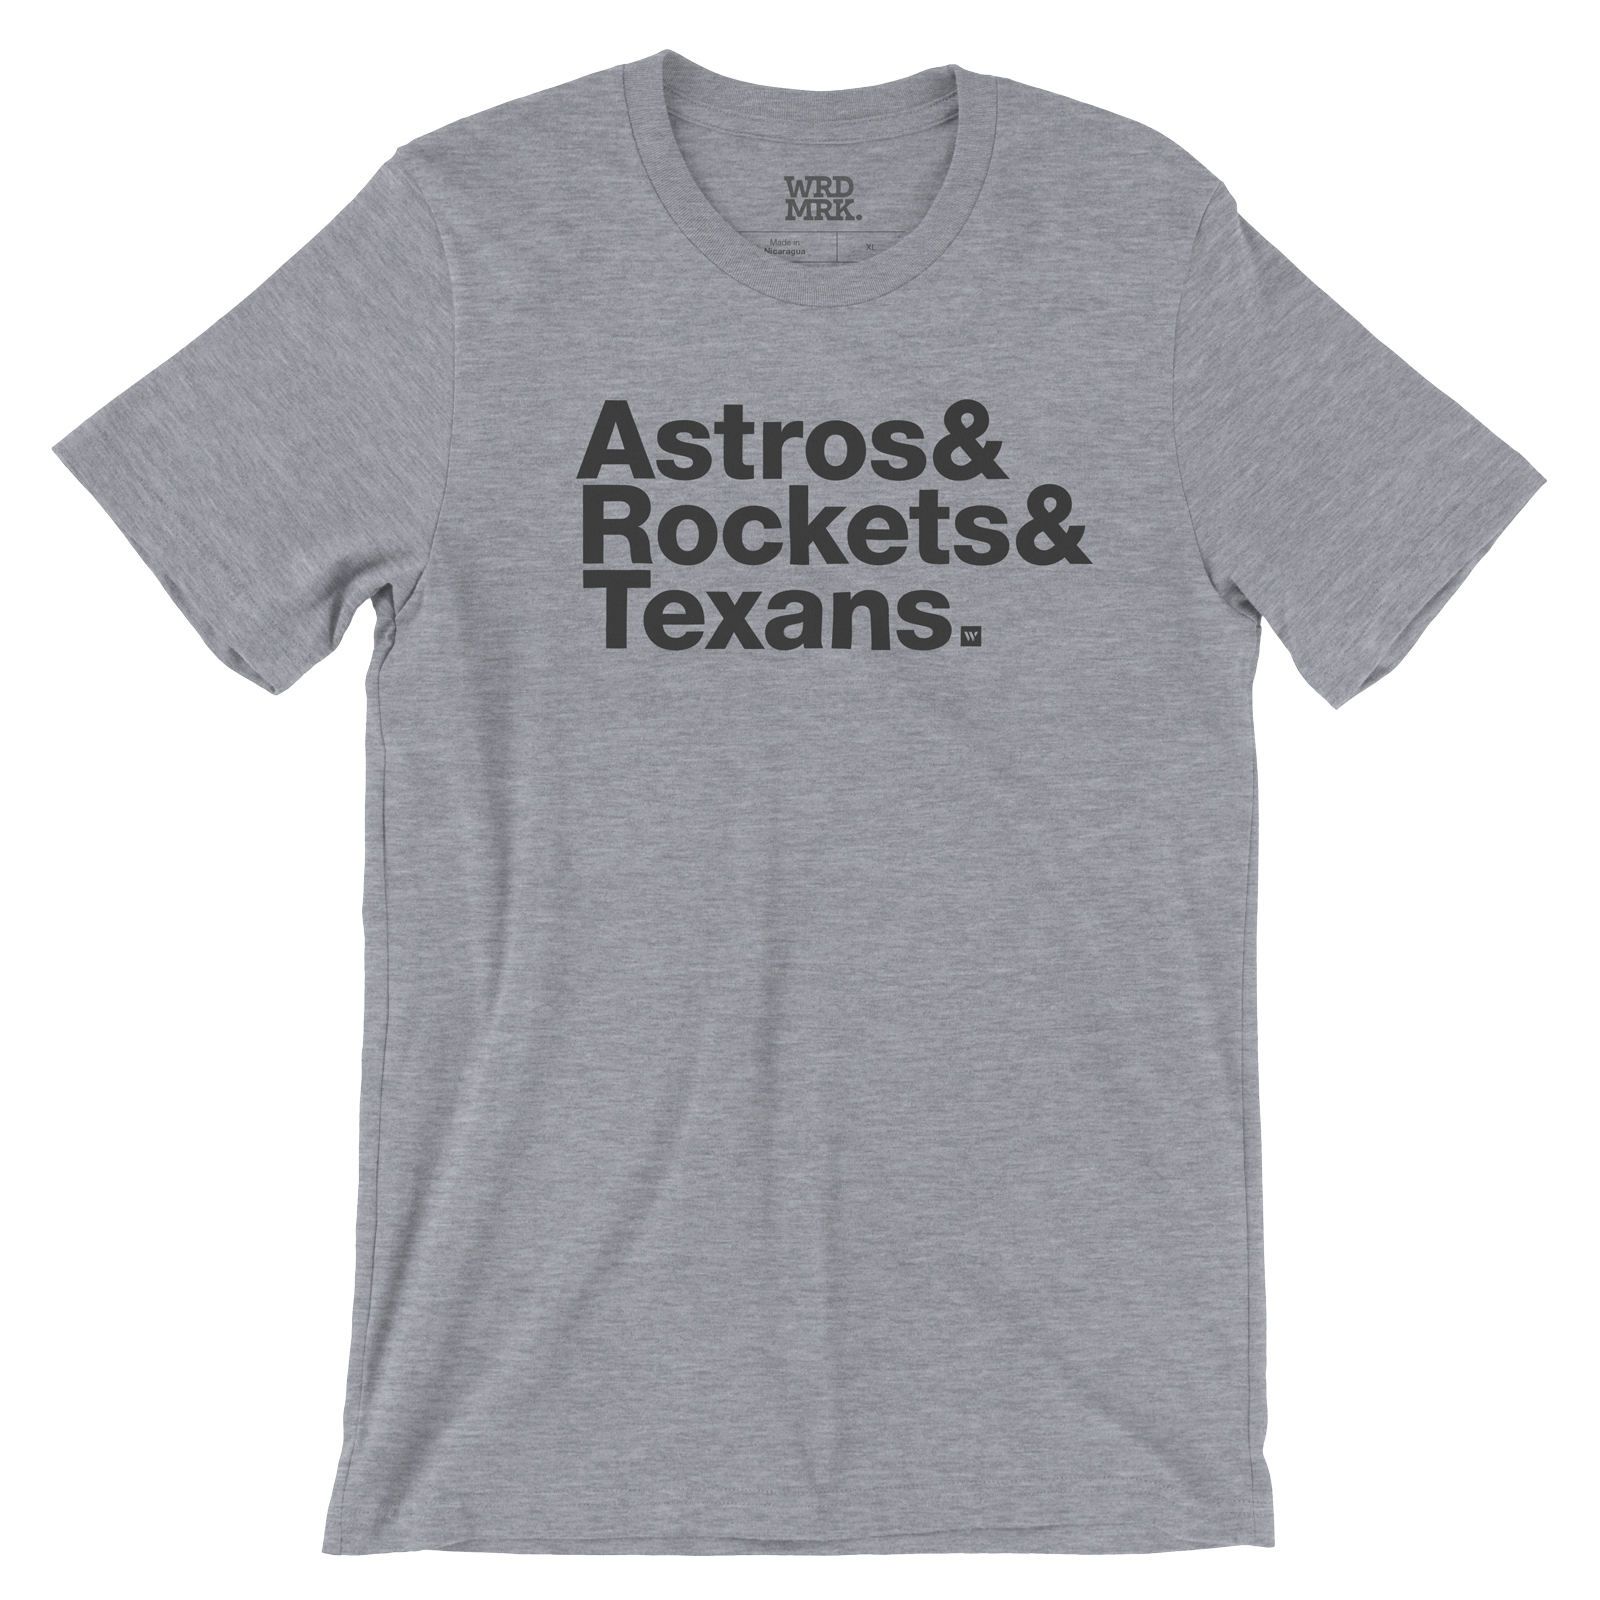 Wrdmrk Astros & Rockets & Texans T-Shirt - Houston Sports Teams - Ampersand Helvetica (White, XS)